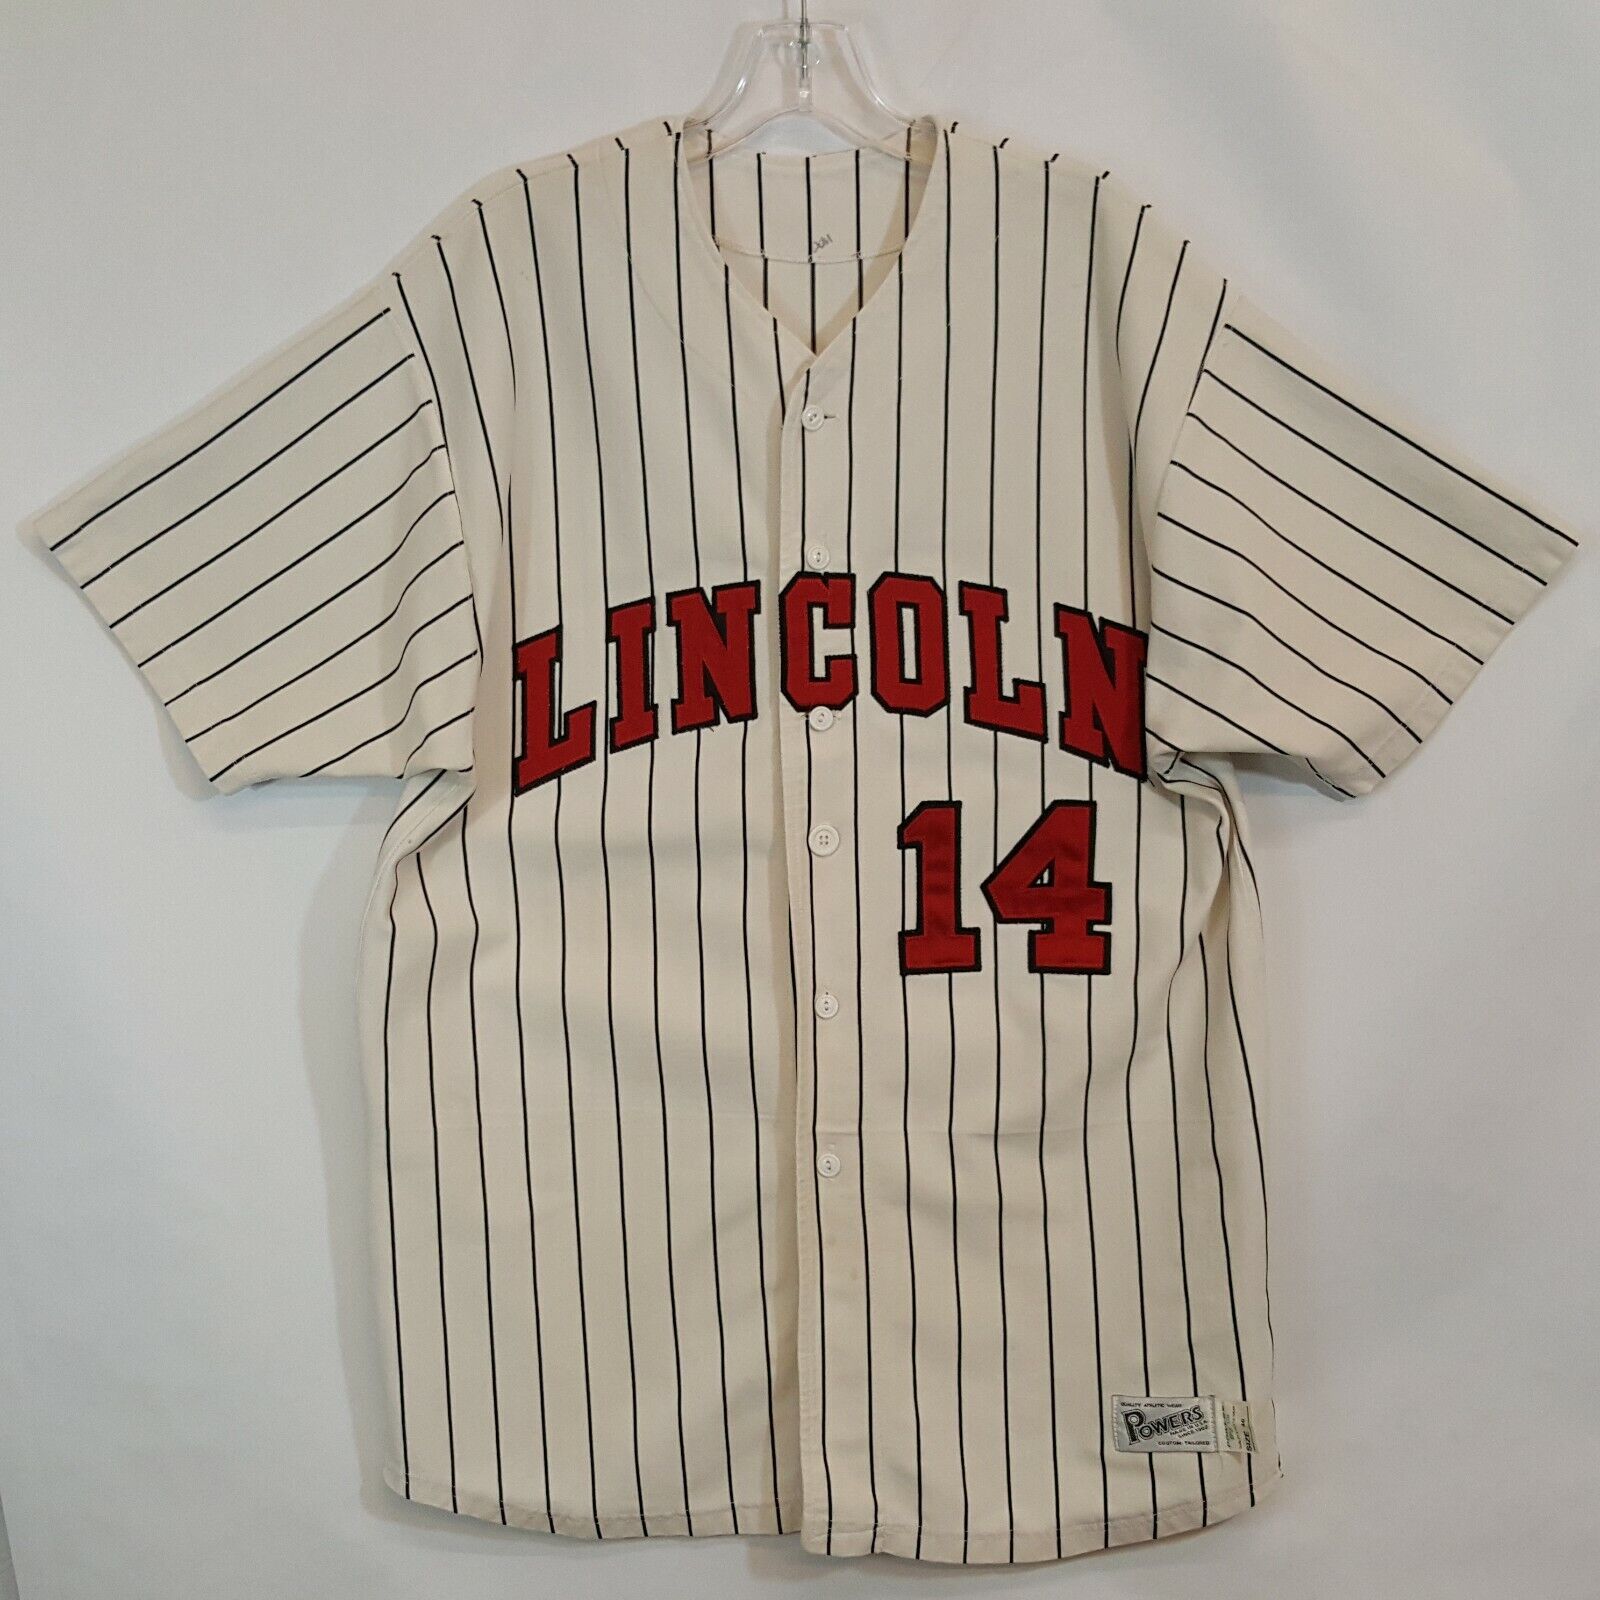 Benny The Jet Rodriguez #30 Baseball Jersey Stitched All Size Free